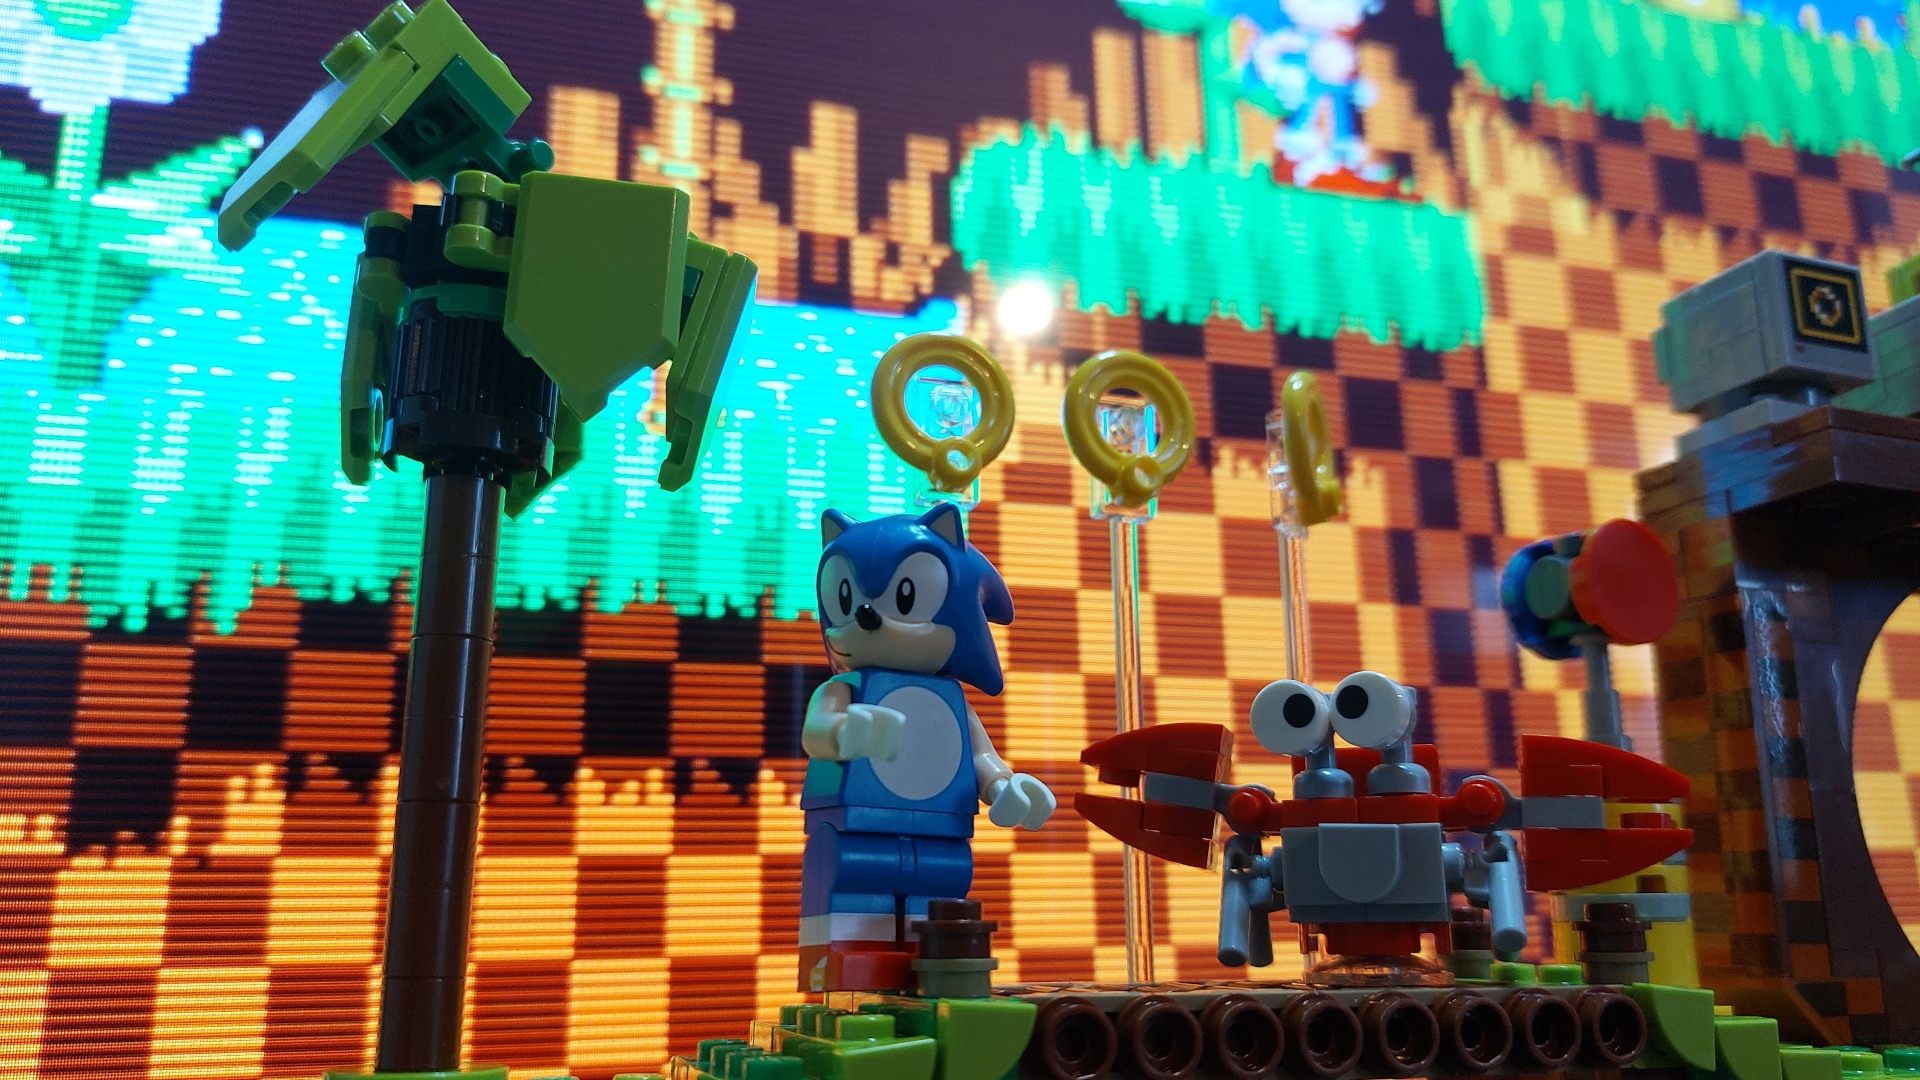 Sonic the Hedgehog Lego Sets Announced